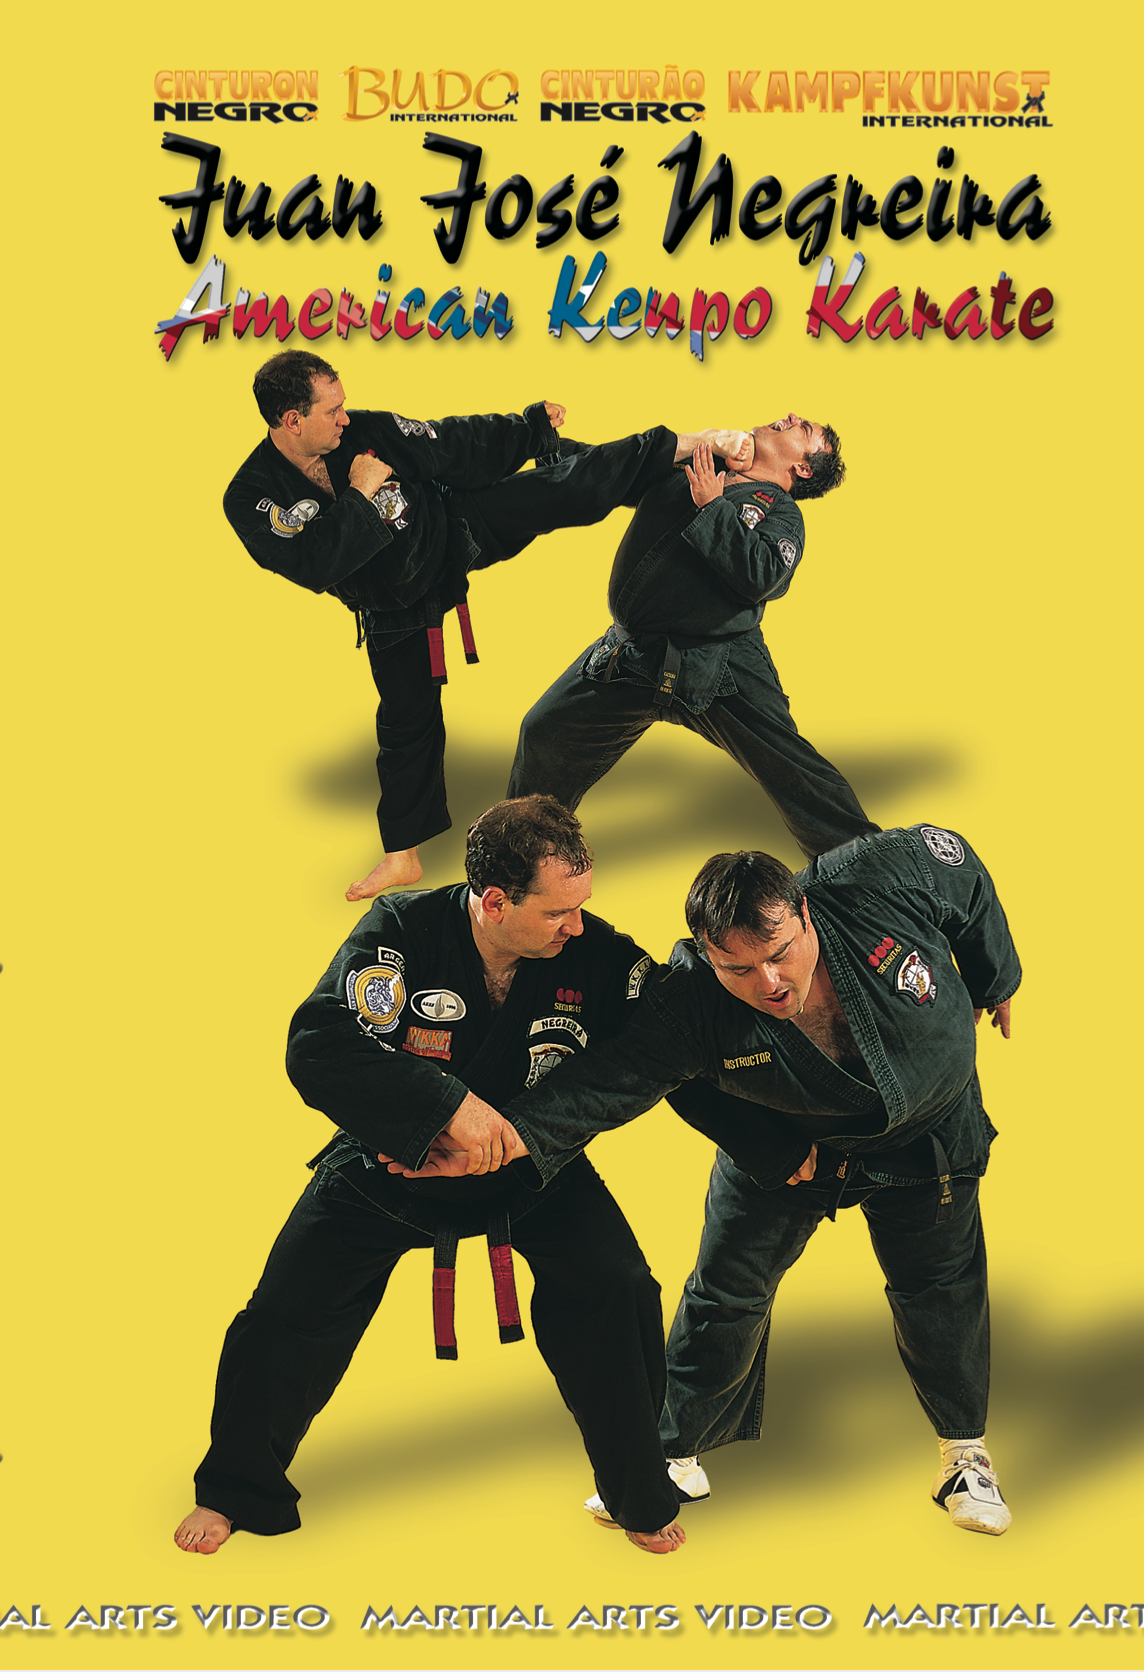 American Kenpo Karate DVD by Juan Jose Negreira - Budovideos